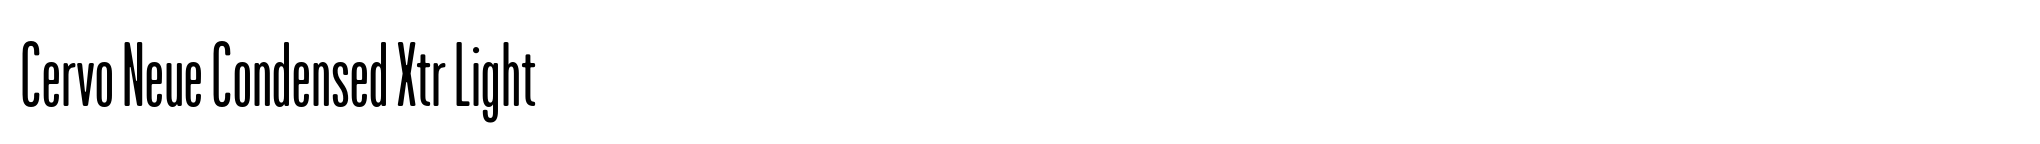 Cervo Neue Condensed Xtr Light image